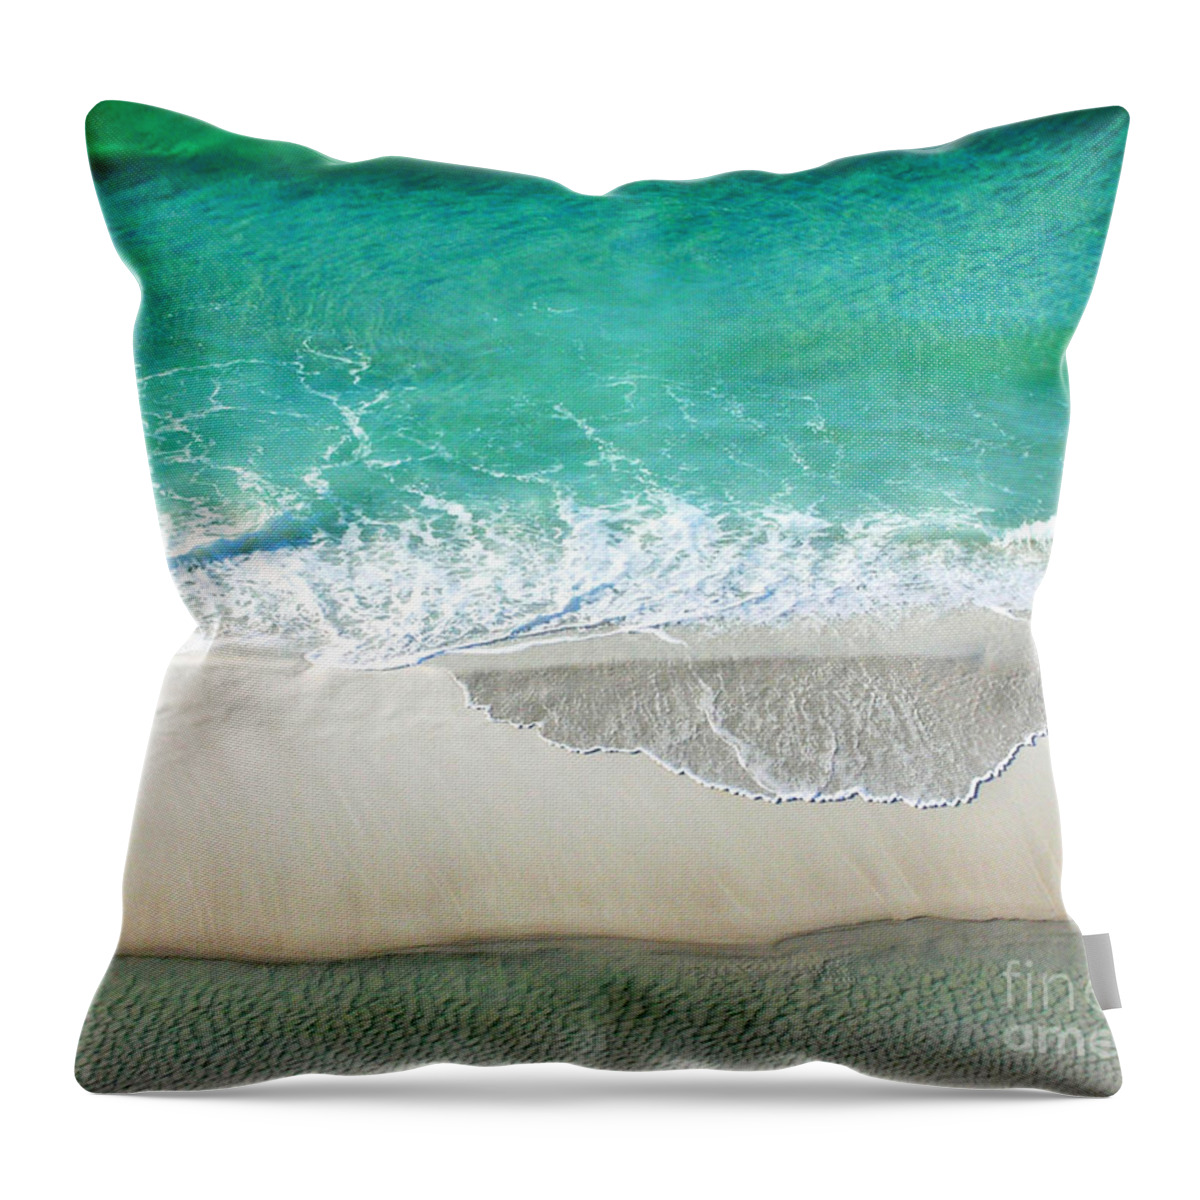 Surf Throw Pillow featuring the photograph Sugar Sand Beach by Lizi Beard-Ward